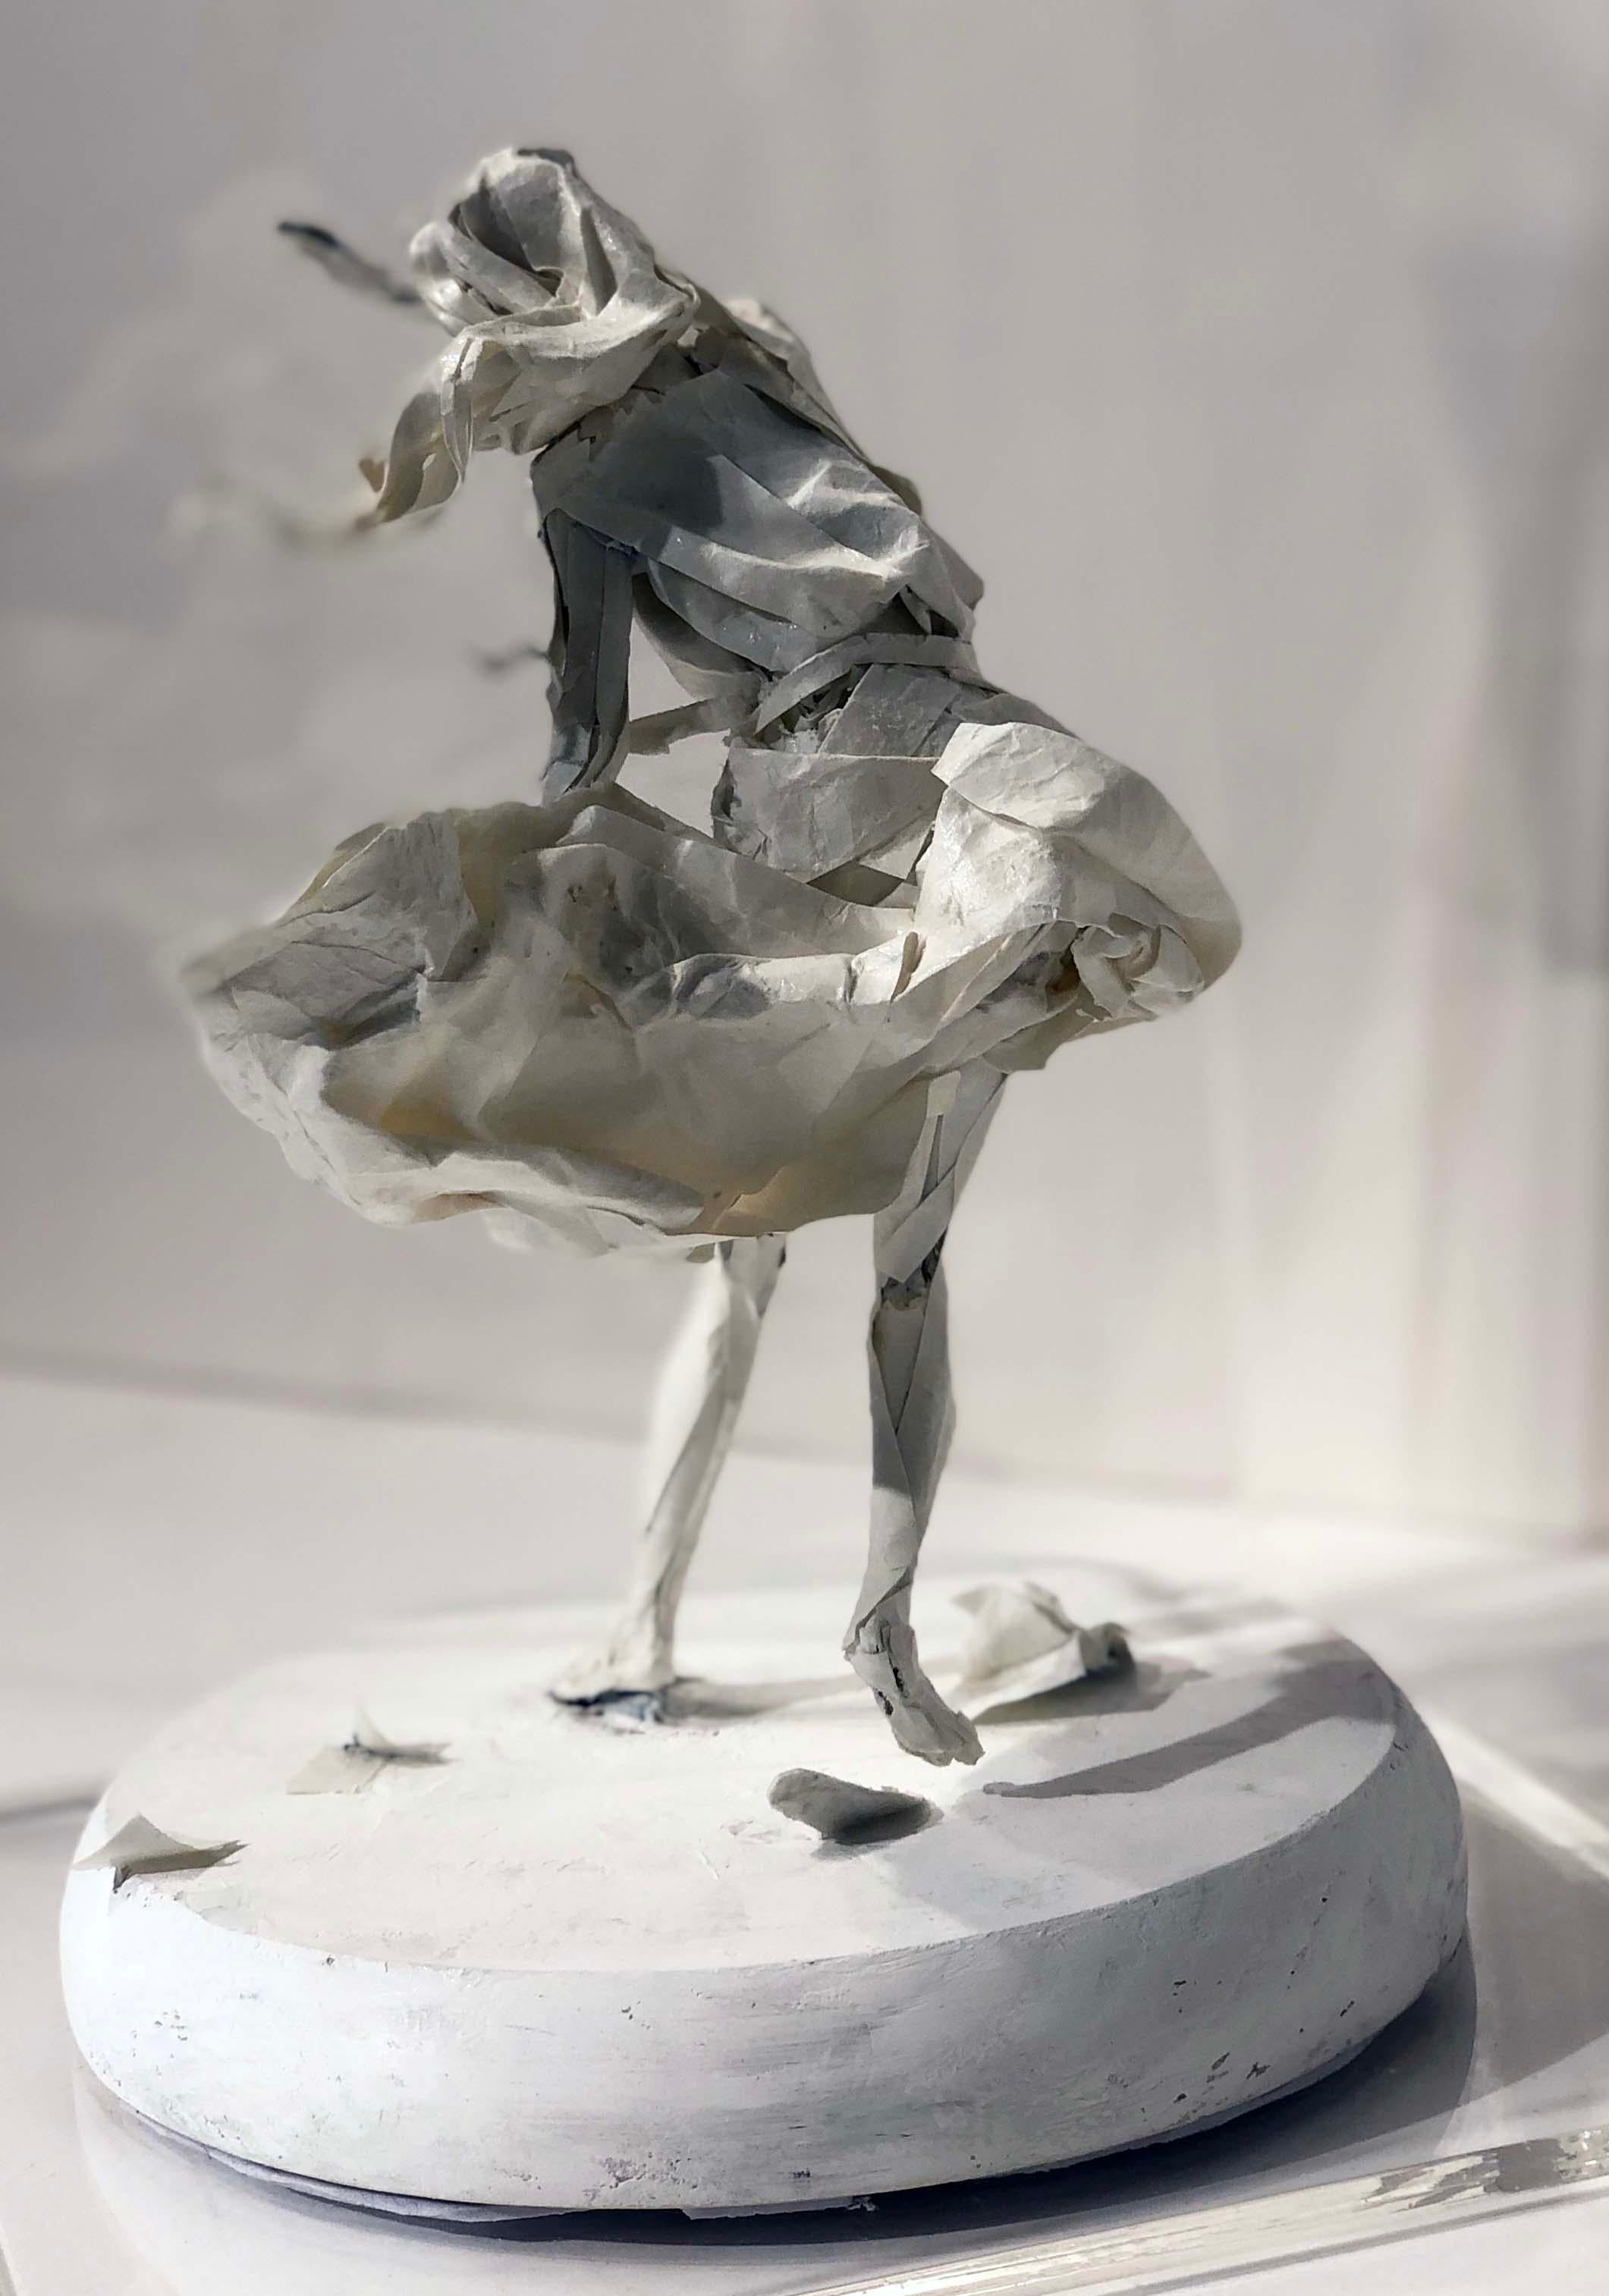 Windstorm - Paper Sculpture, Female Figure Swept Up in a Gust of Wind - Black Figurative Sculpture by Ivan Markovic